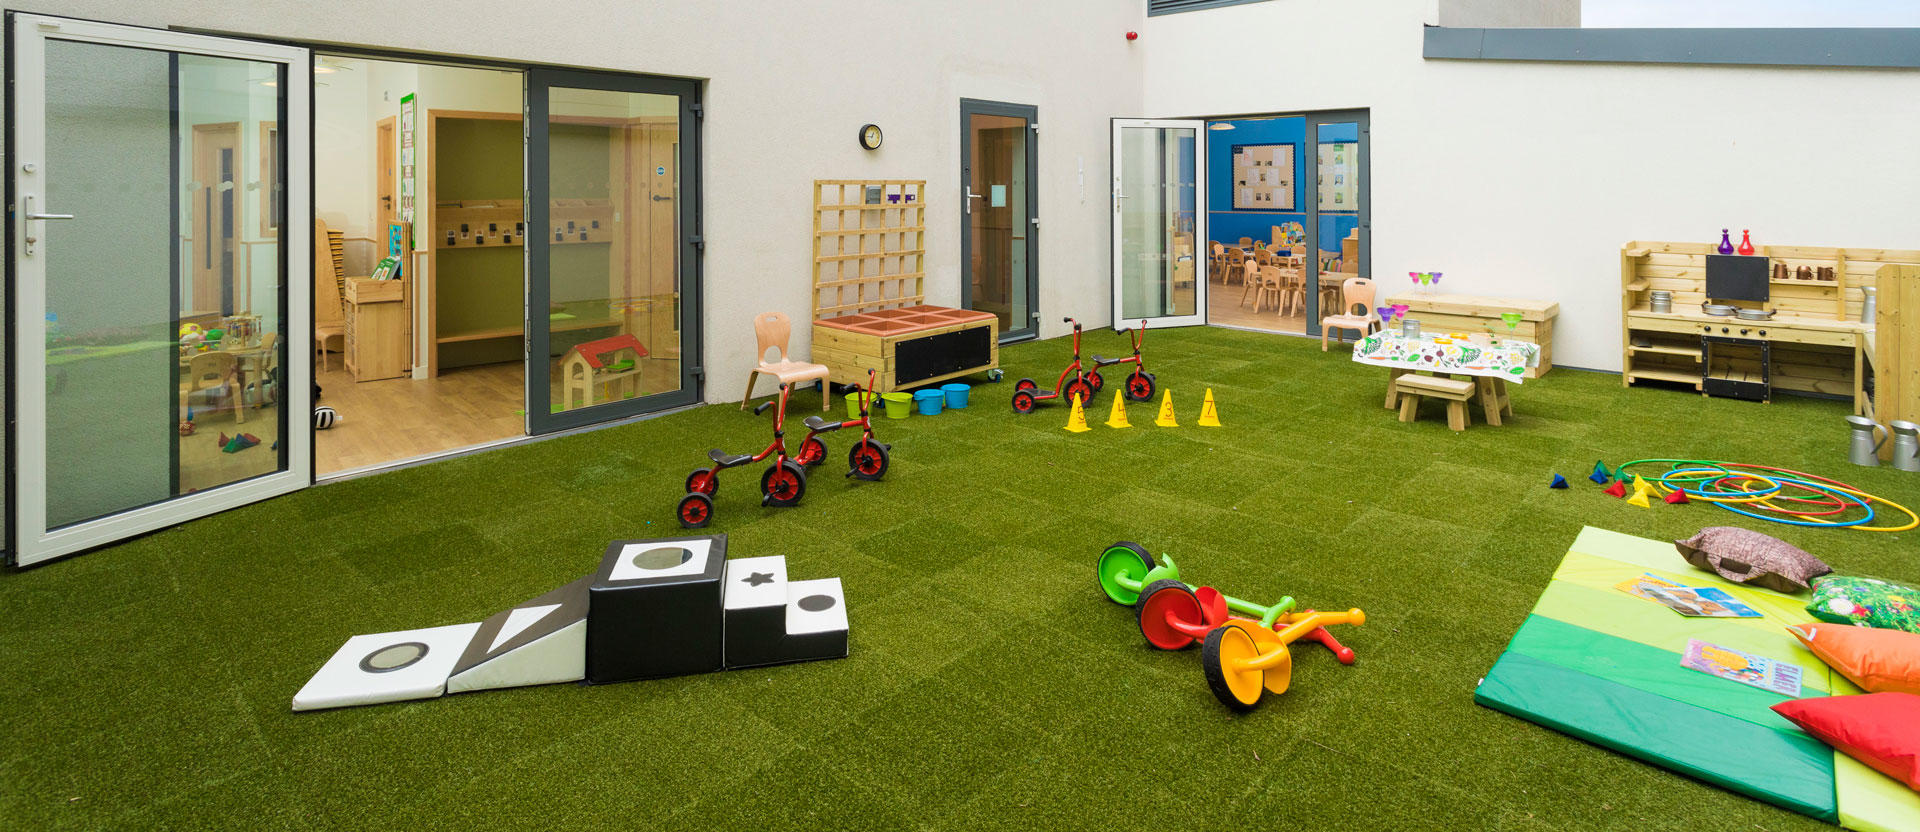 Bright Horizons Greenwich Day Nursery and Preschool London 03450 044752